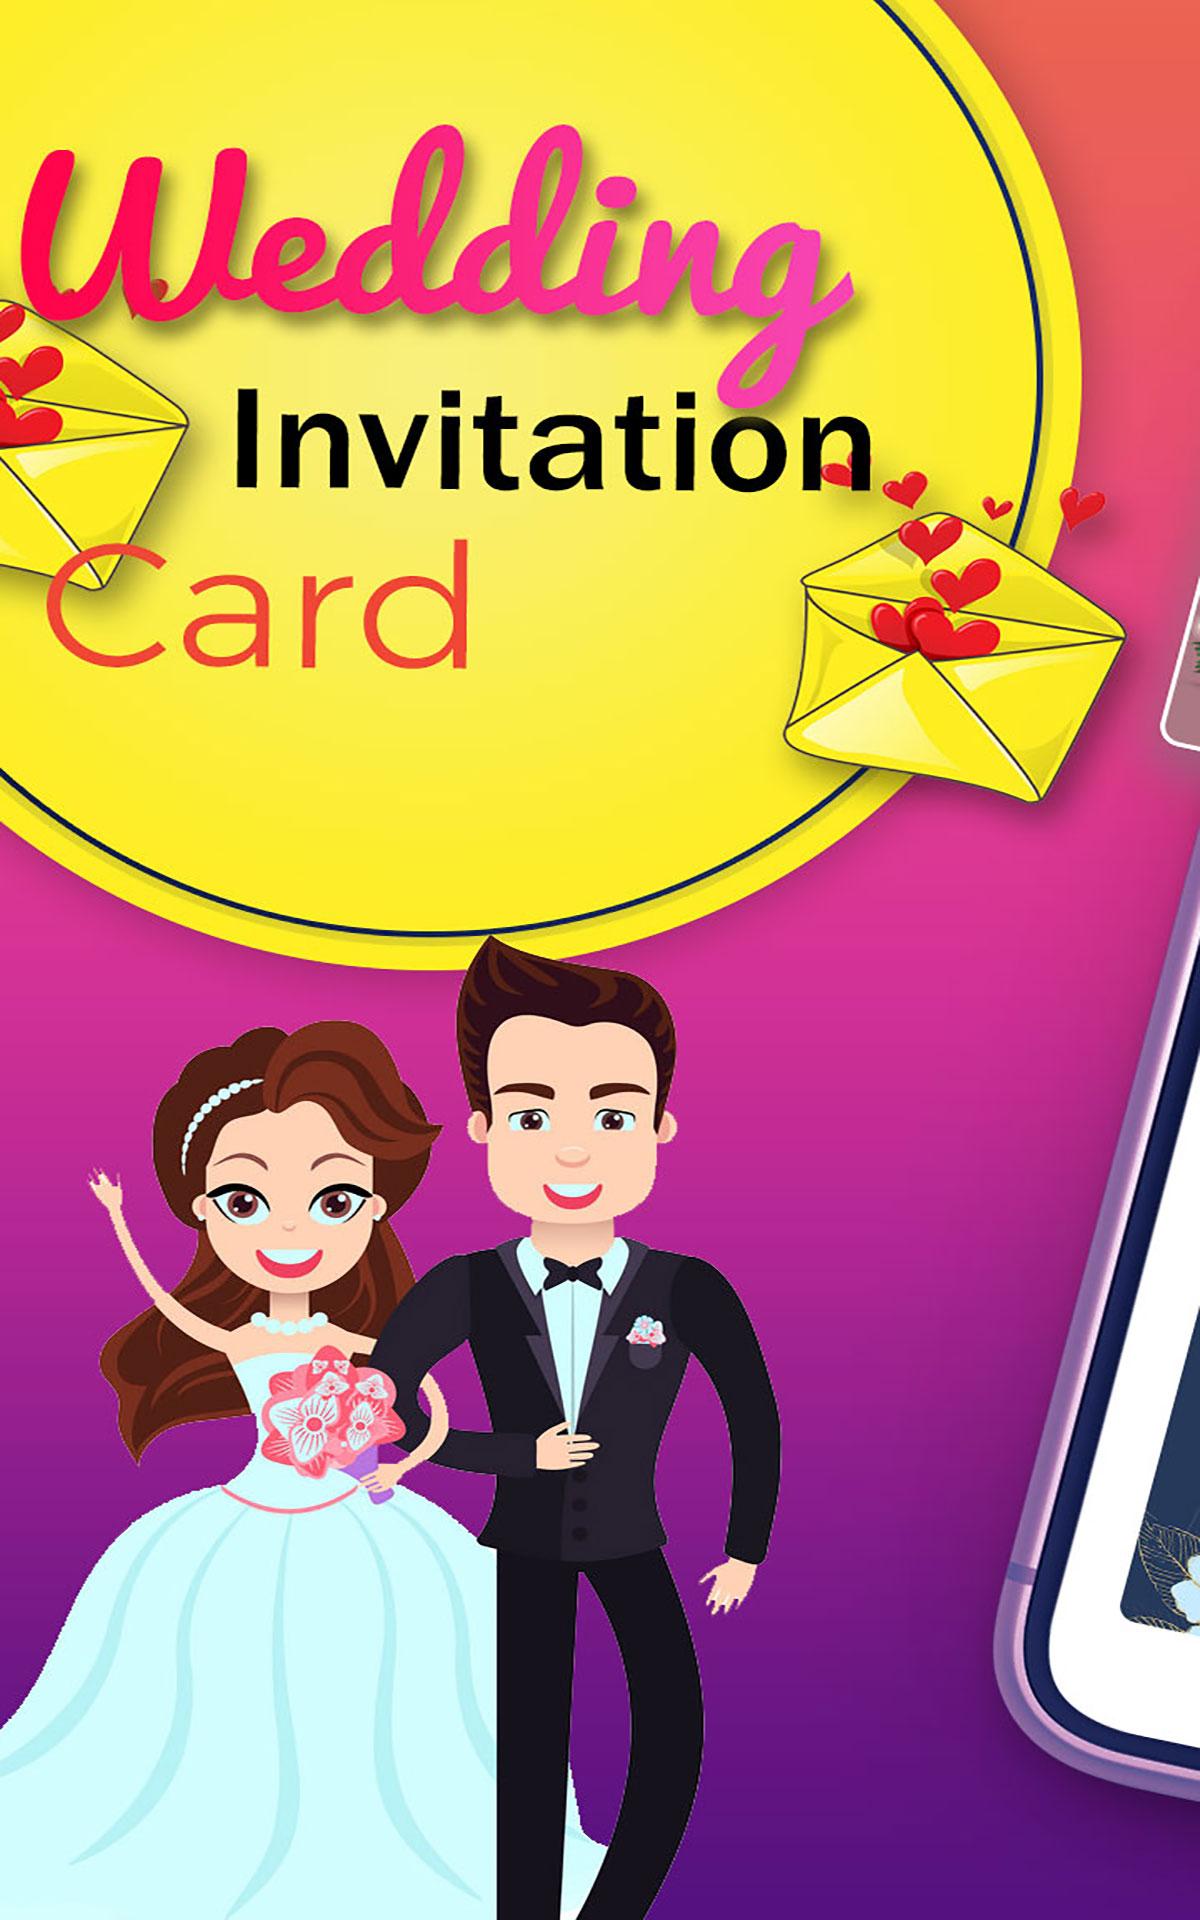 Wedding Invitation Card Maker 1.1 Screenshot 7